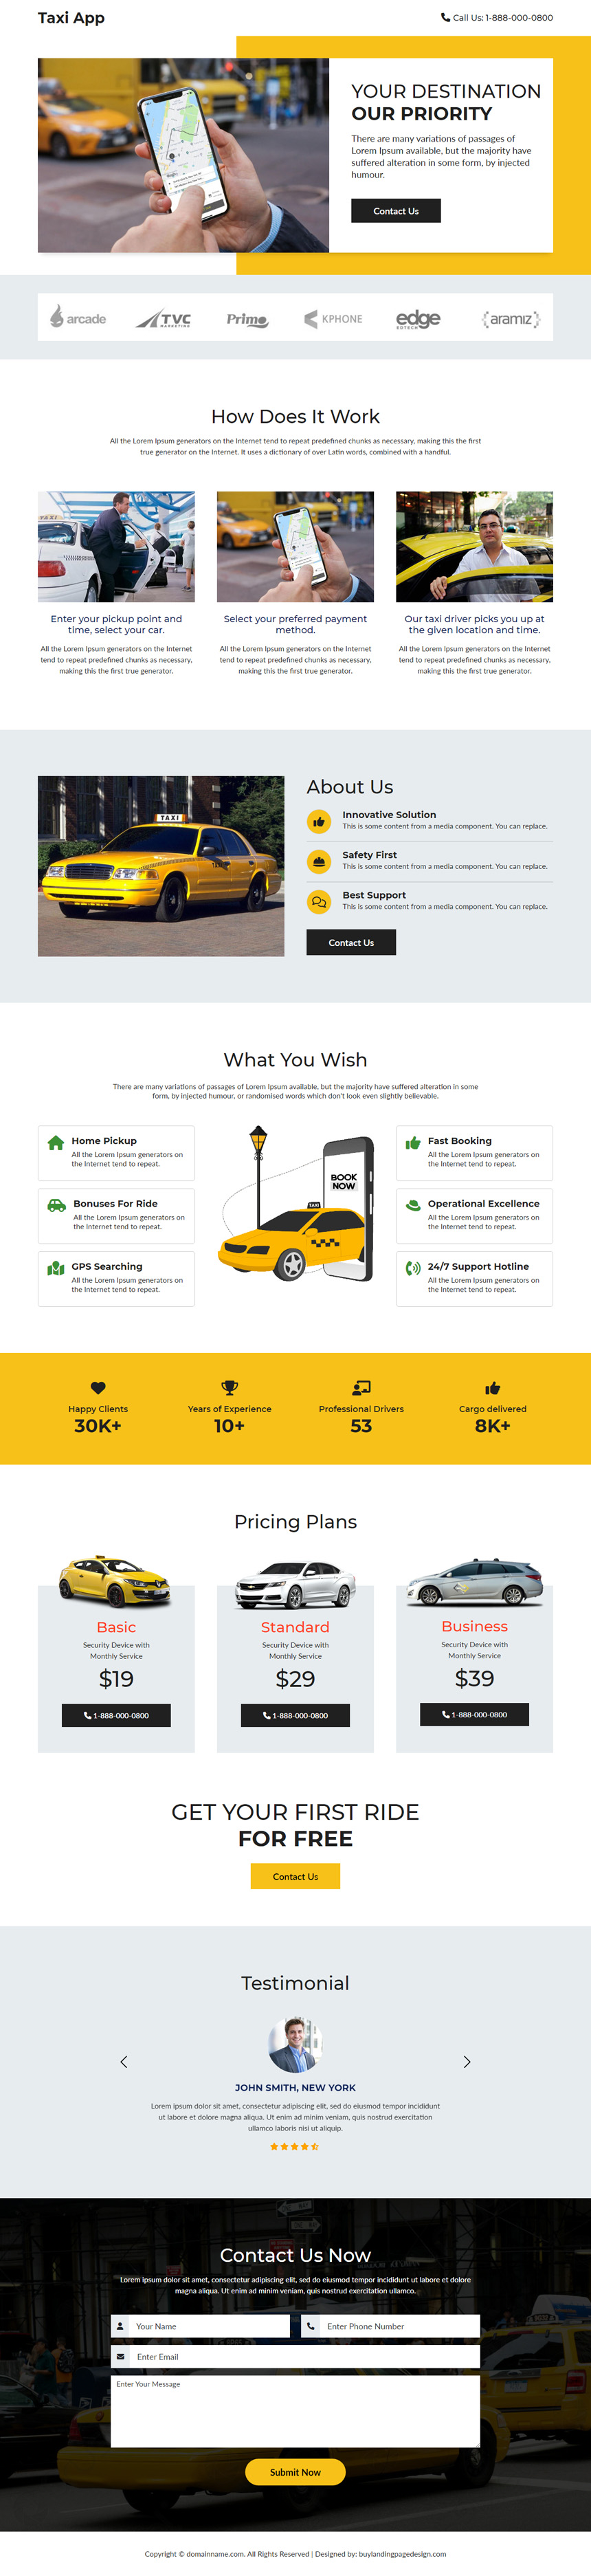 taxi app lead capture responsive landing page